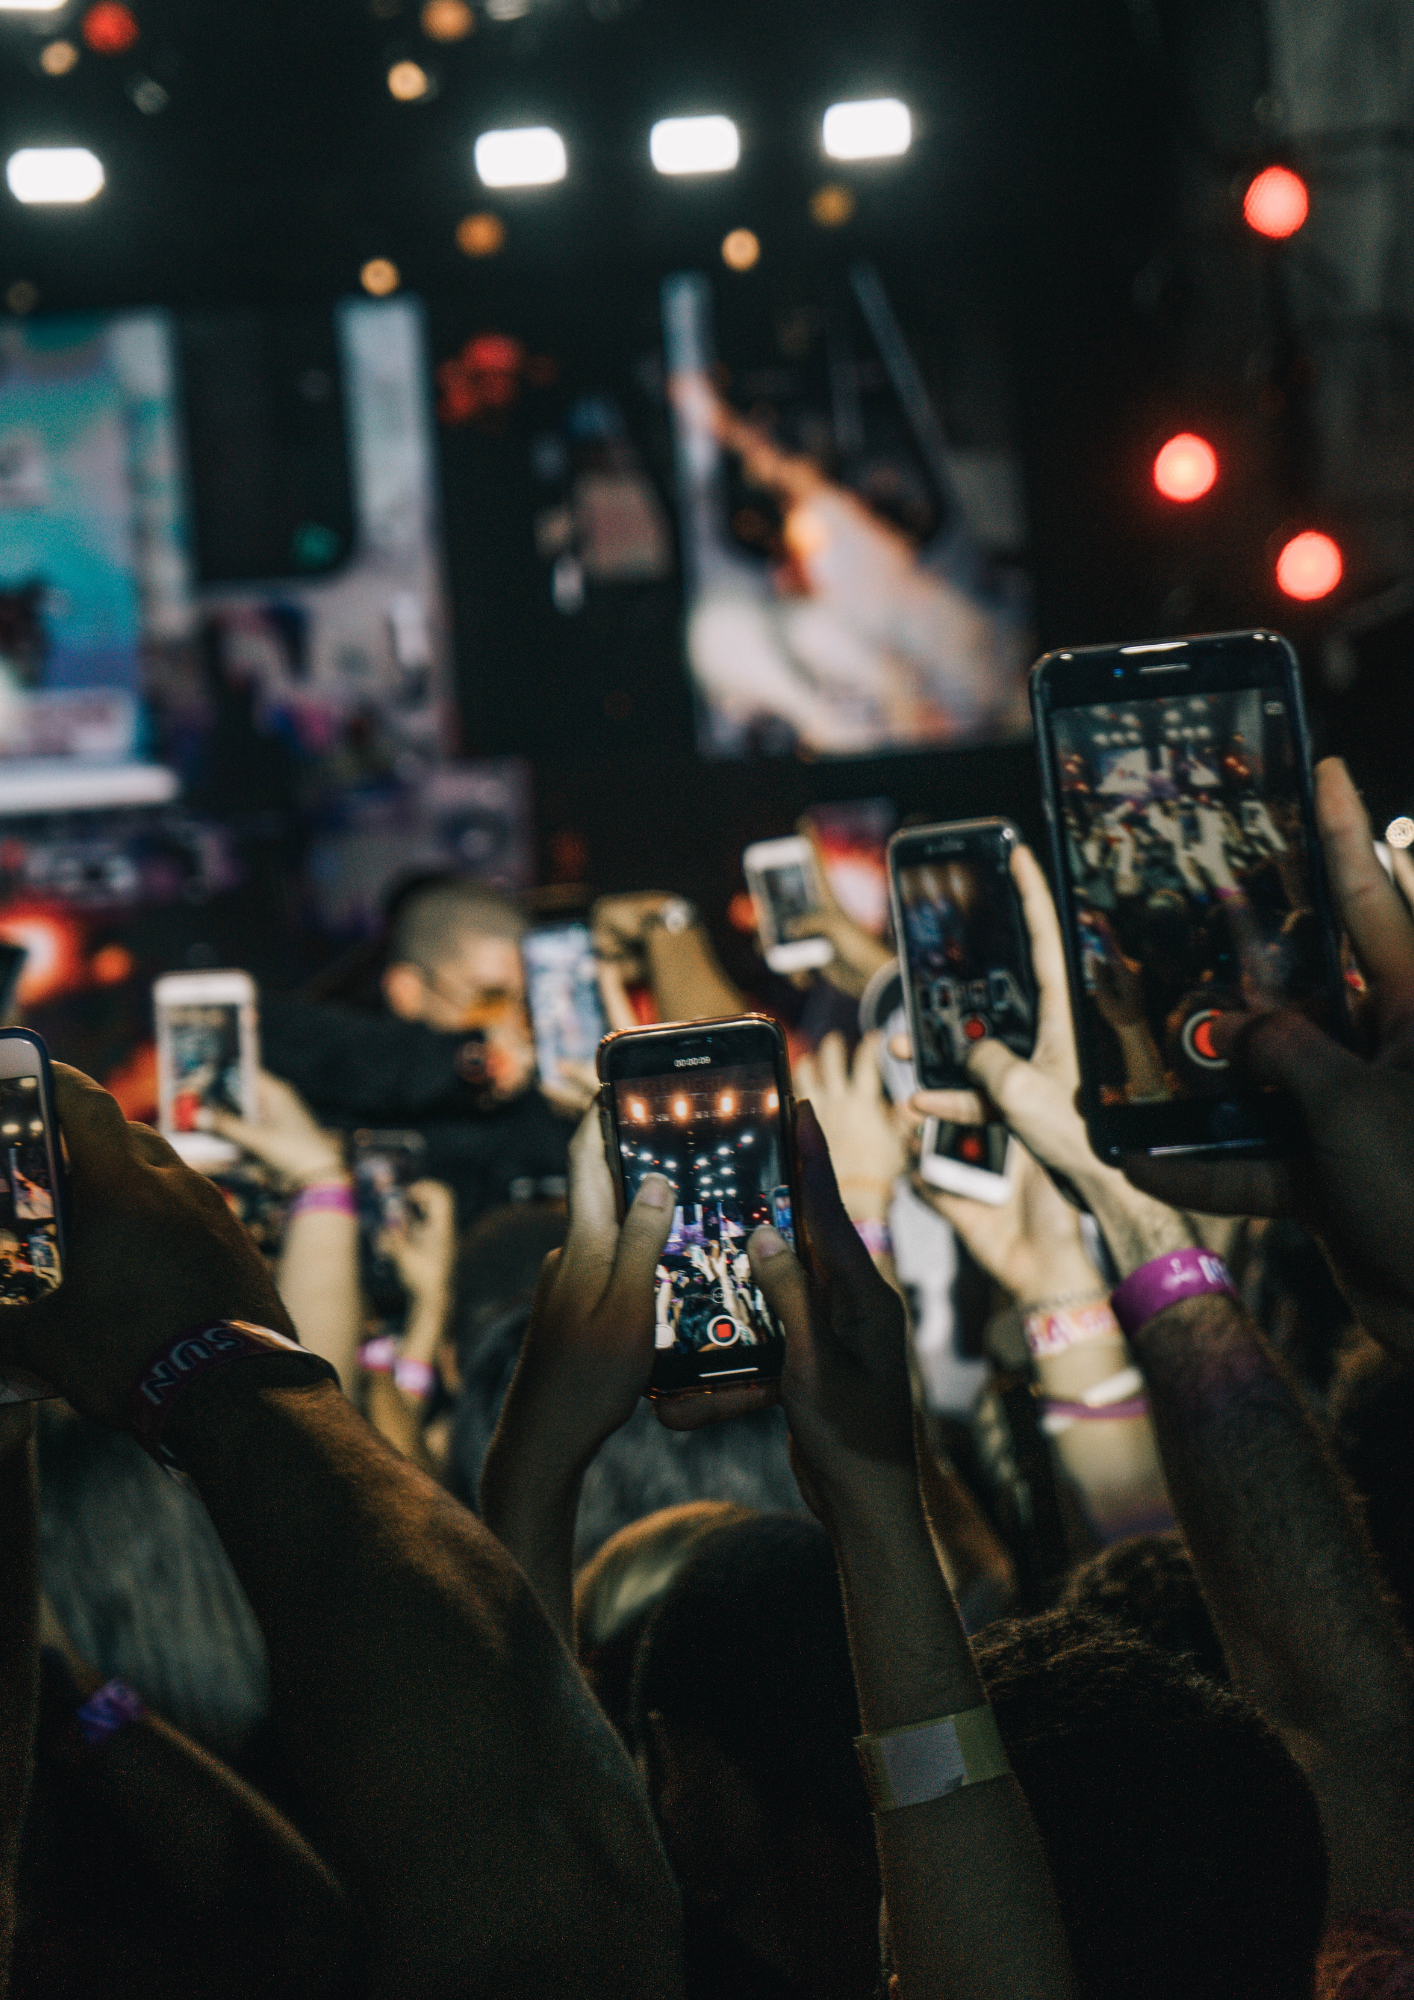 The Perception of Millennial Generation on Religious Moderation through Social Media in the Digital Era